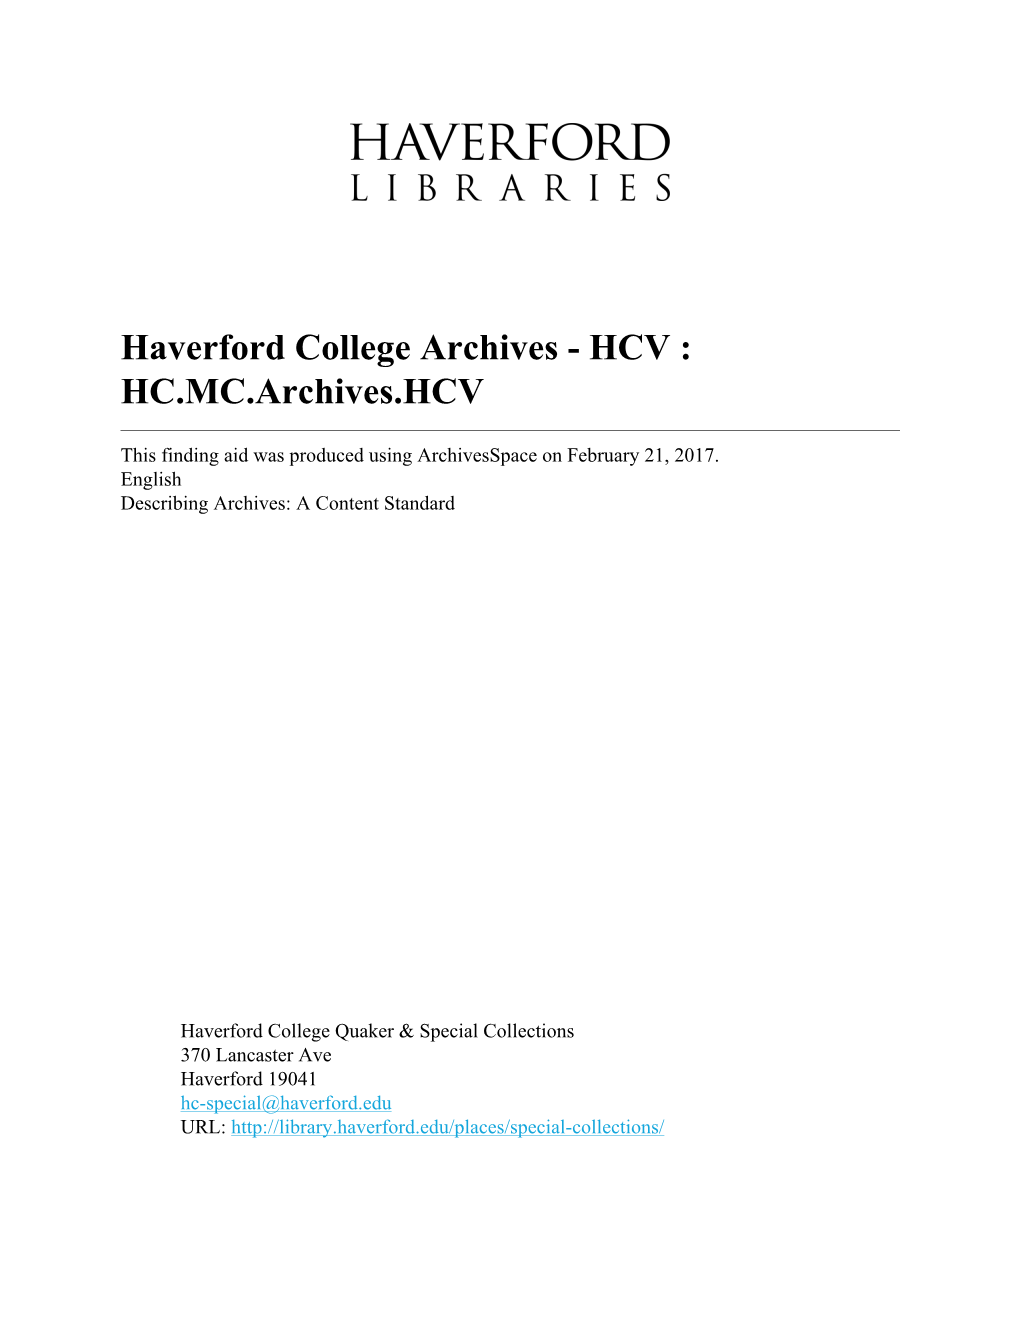 HC.MC.Archives.HCV